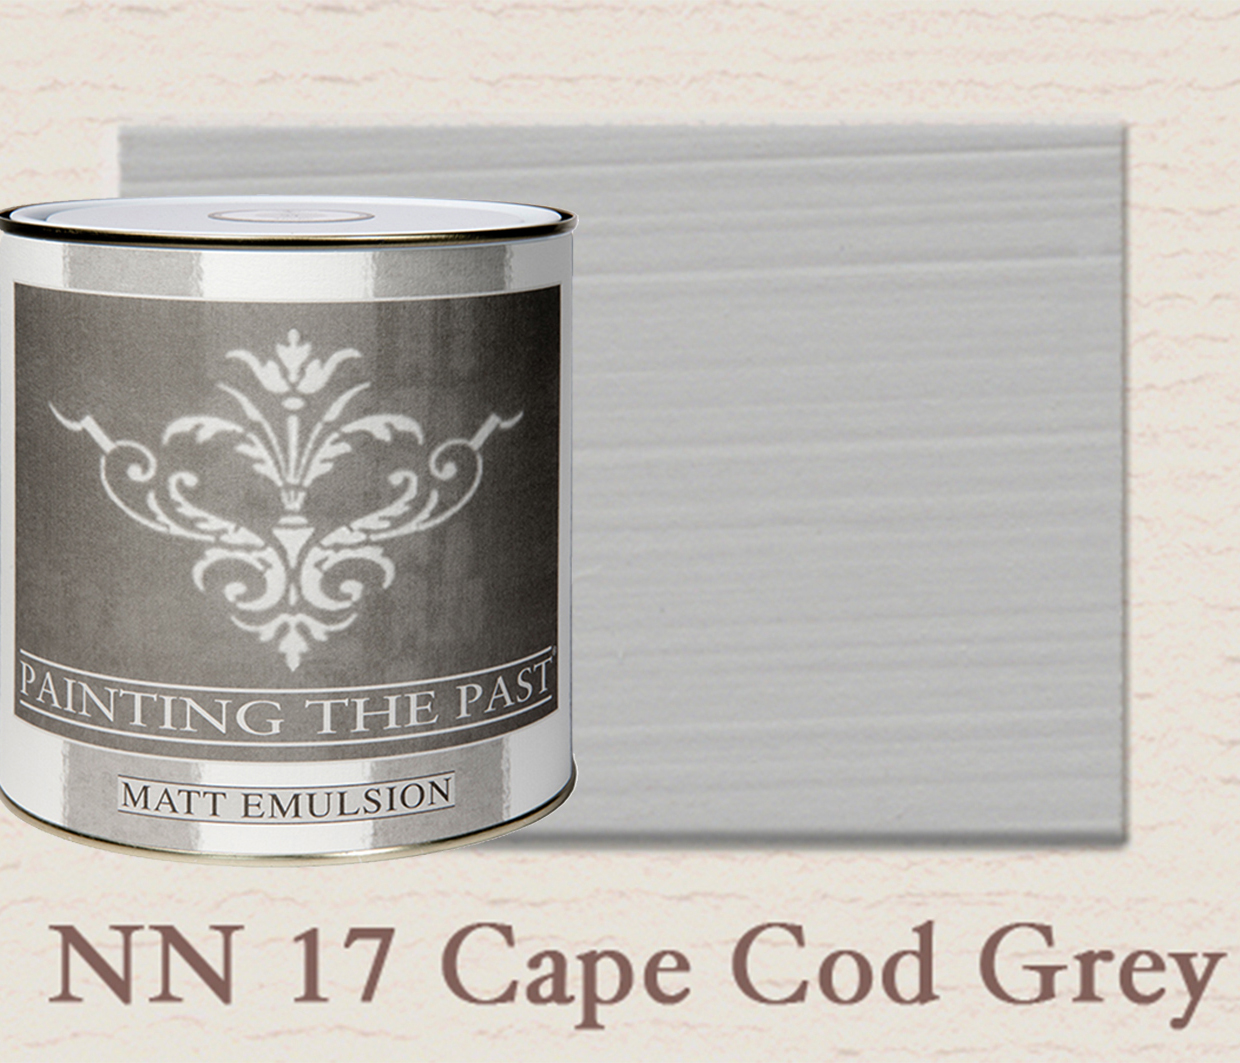 Painting The Past Matt Emulsion Cape Cod Grey